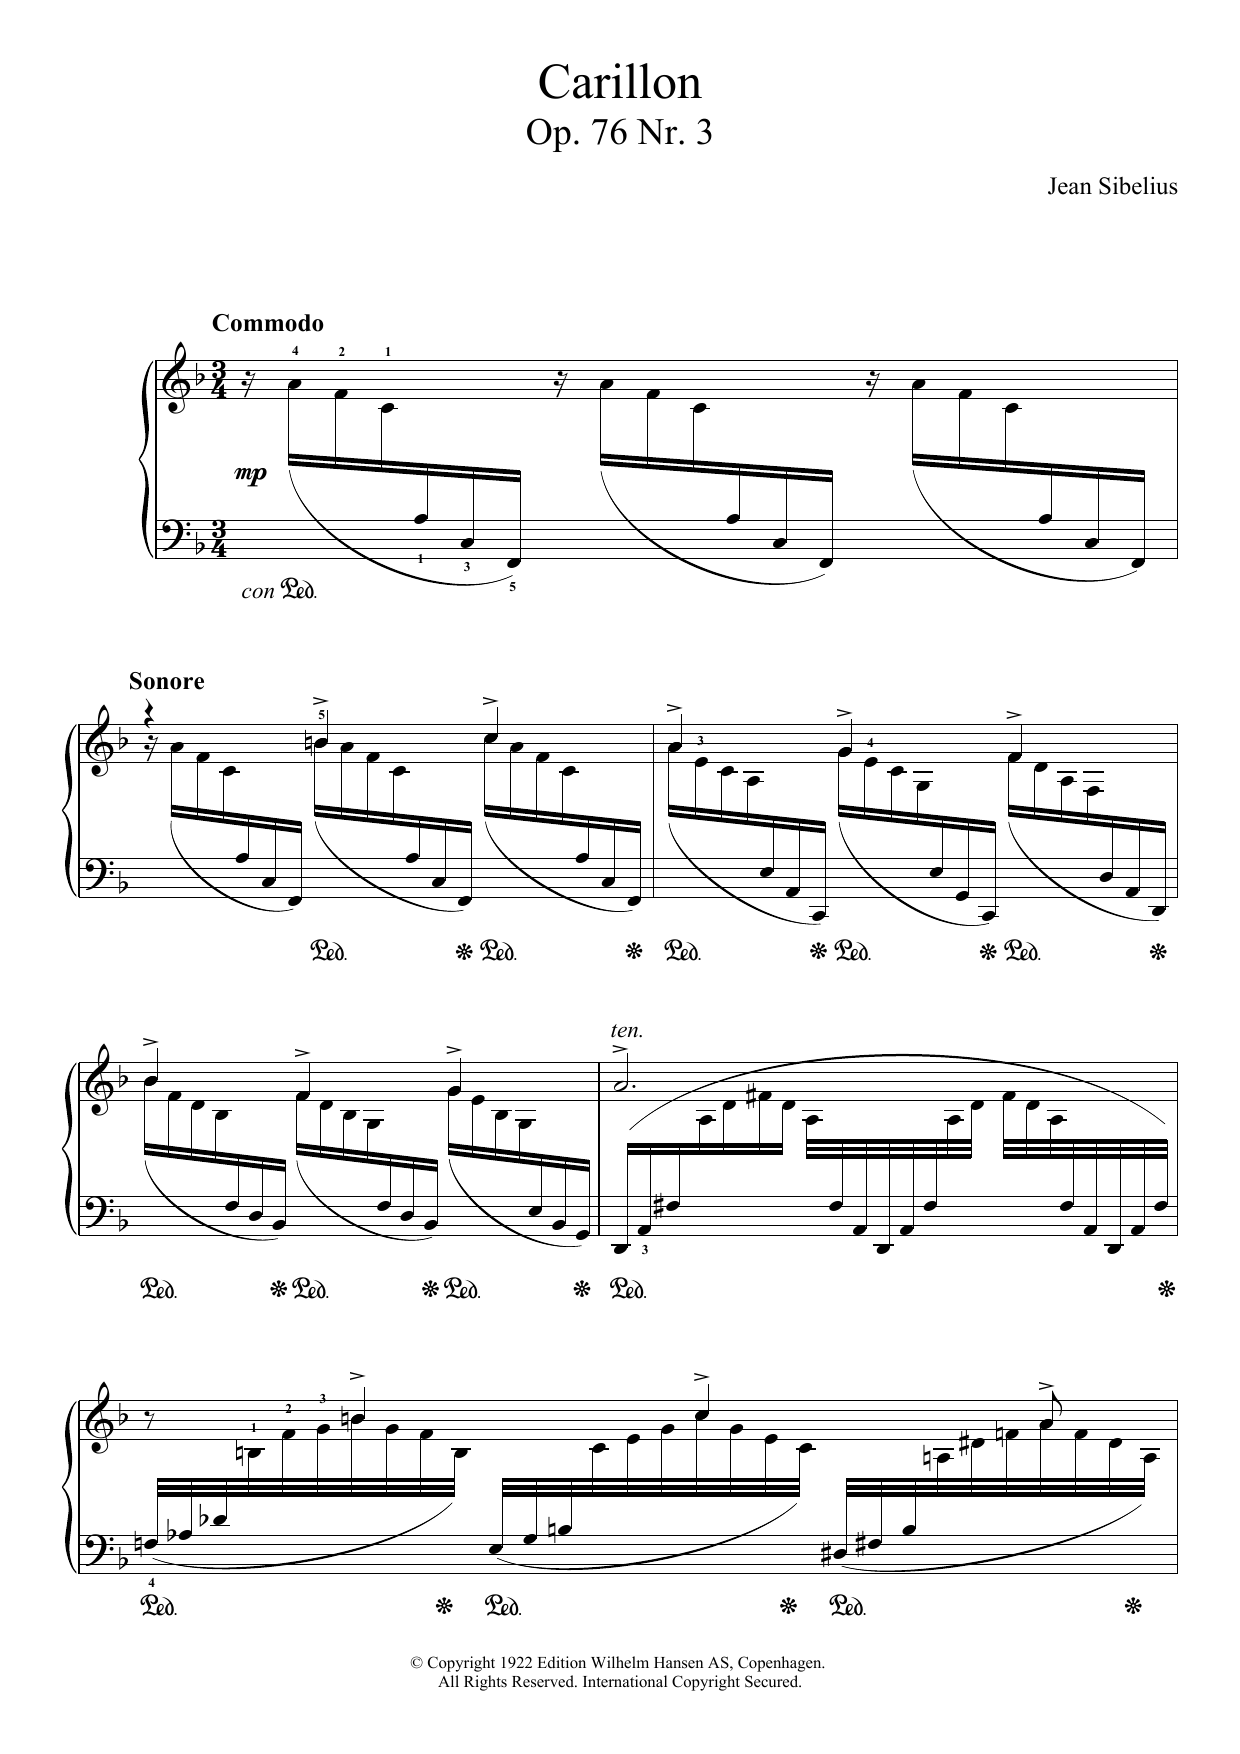 13 Morceaux, Op.76 - III. Carillon (Piano Solo) von Jean Sibelius